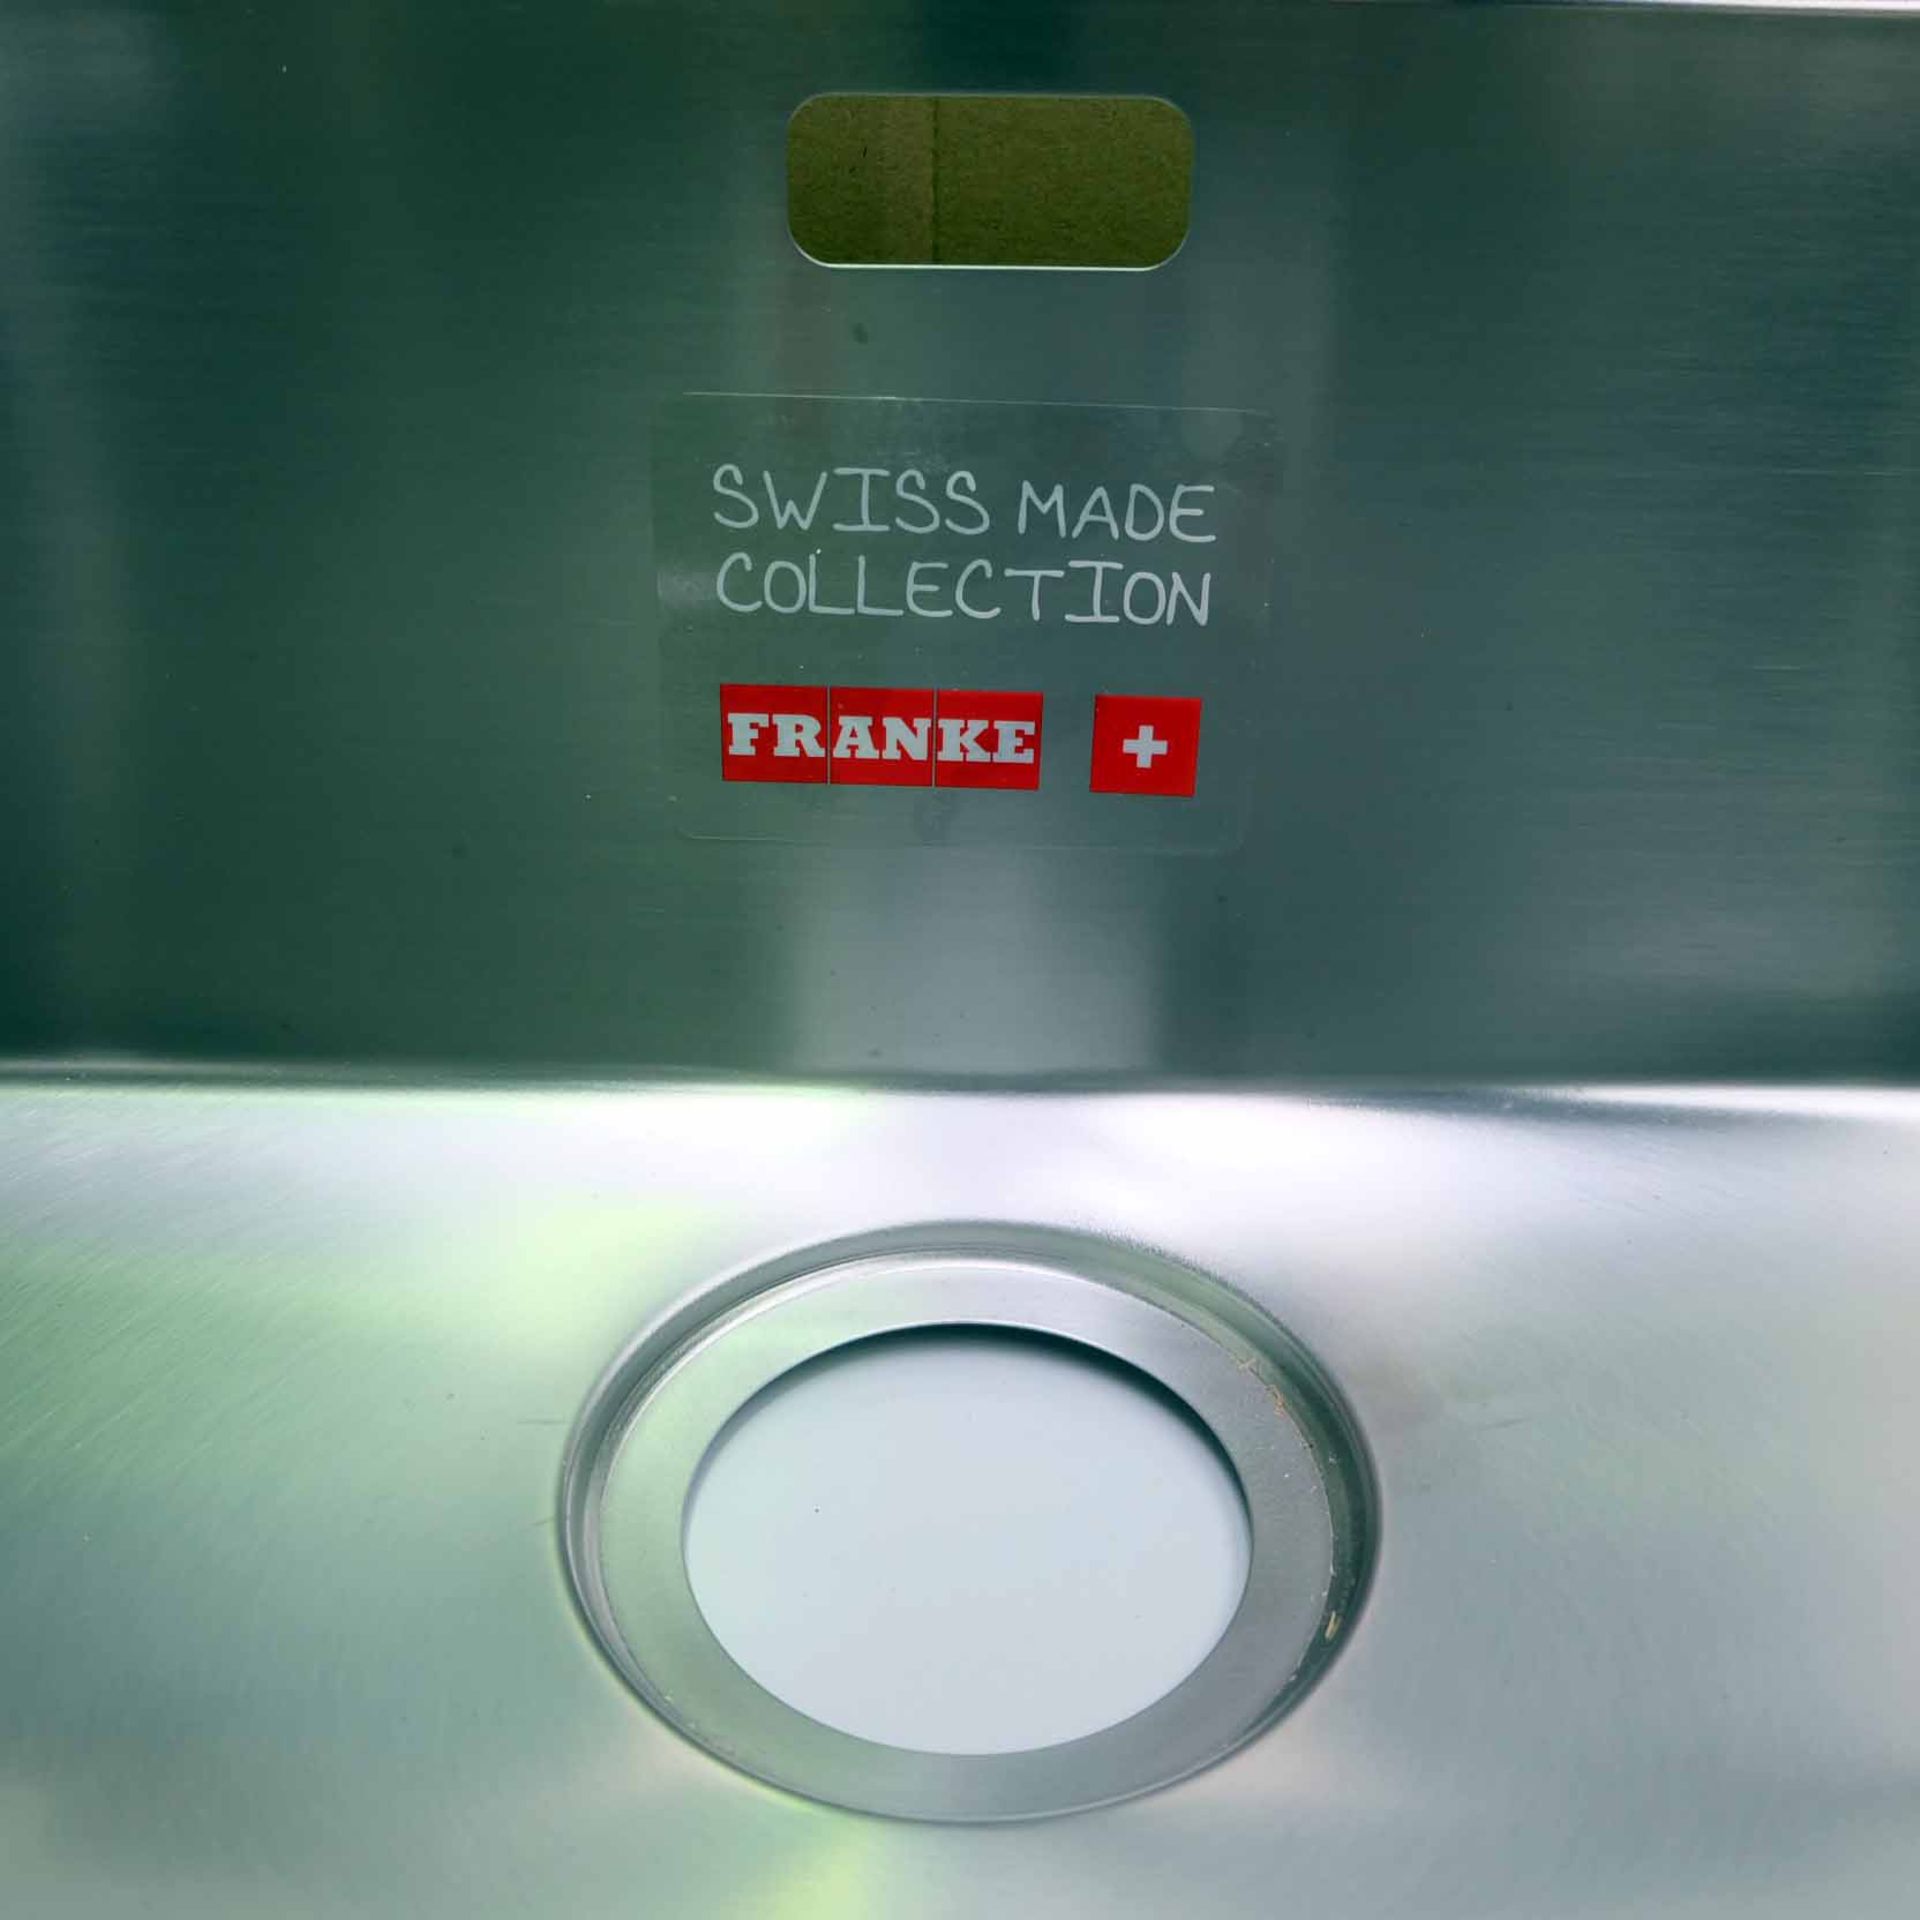 FRANKE + Swiss Made Collection Stainless Steel Sink. External Size 735mm W x 440mm D x 215mm H. Inte - Bild 3 aus 17